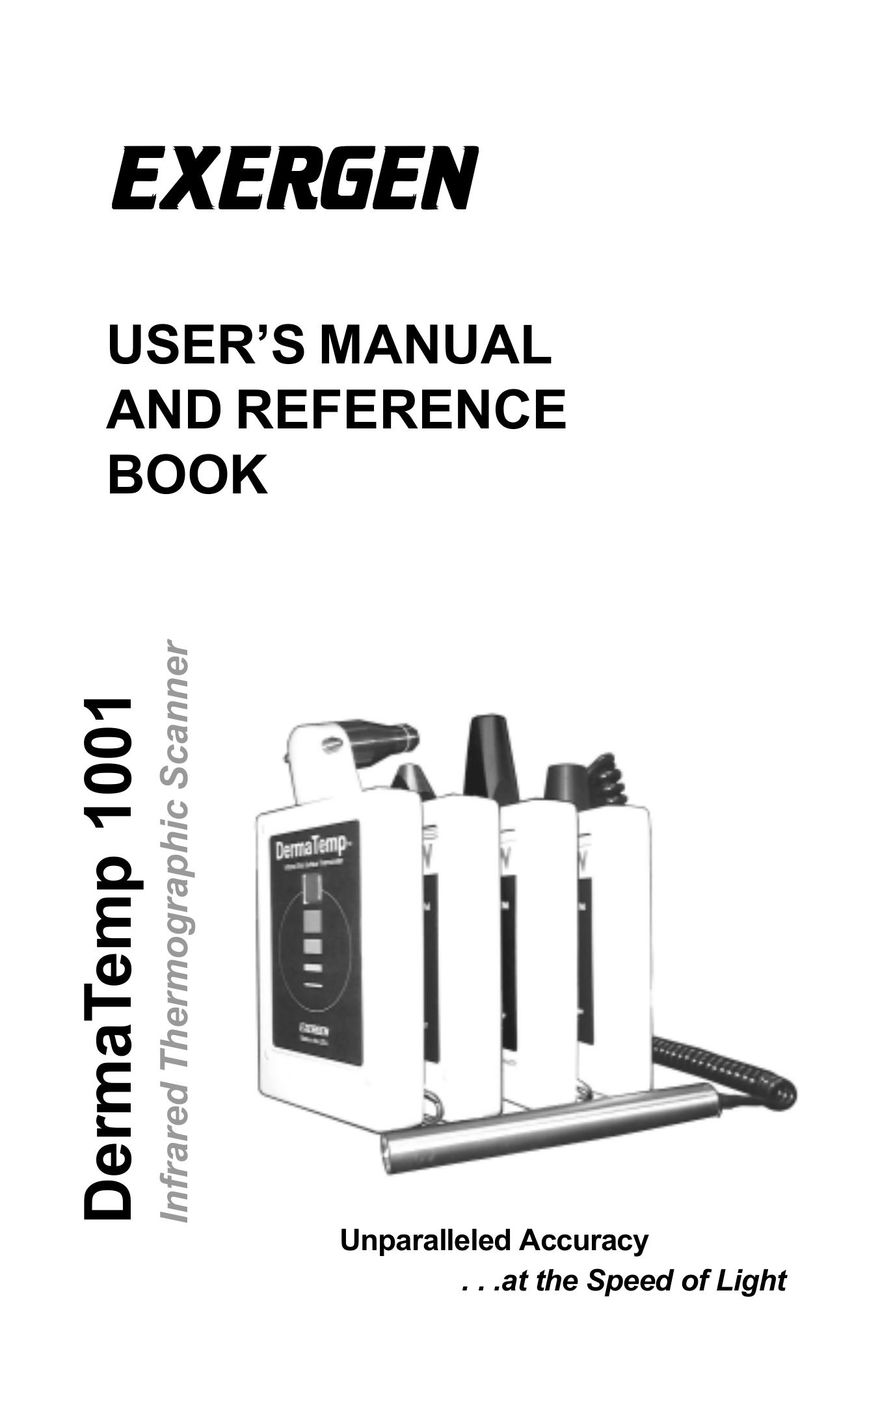 Exergen DT 1001-LN Scanner User Manual